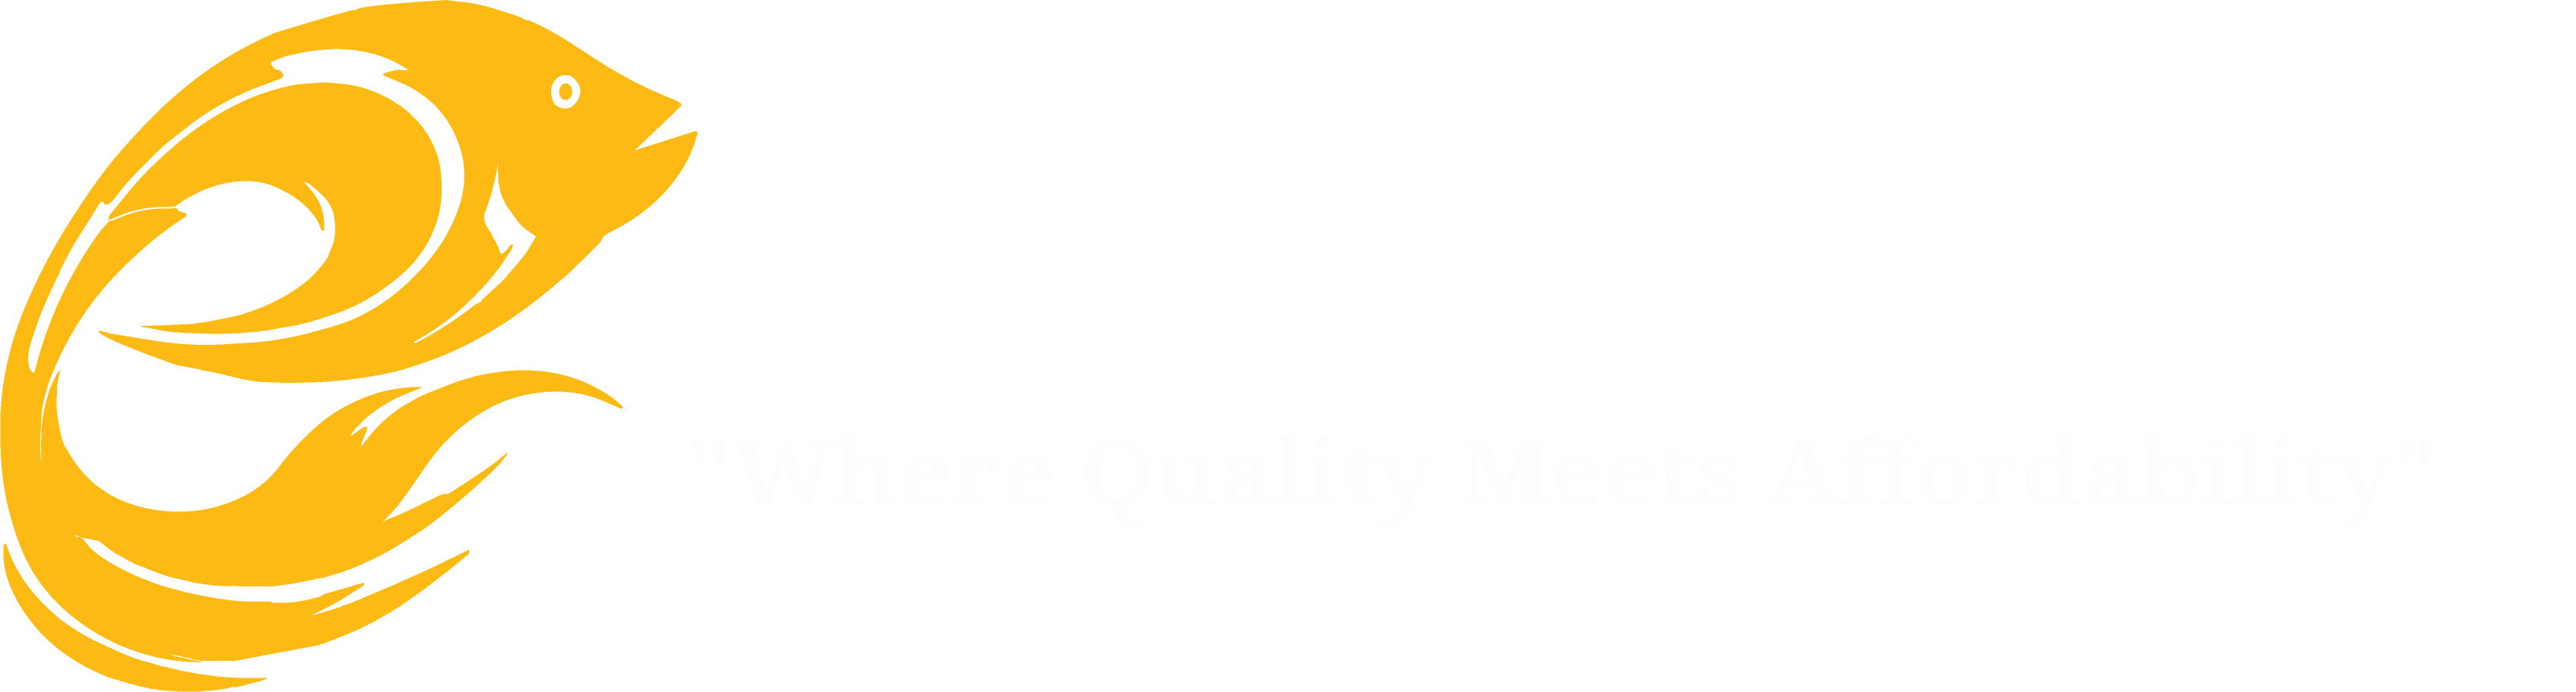 Lanka Dry Fish.Com